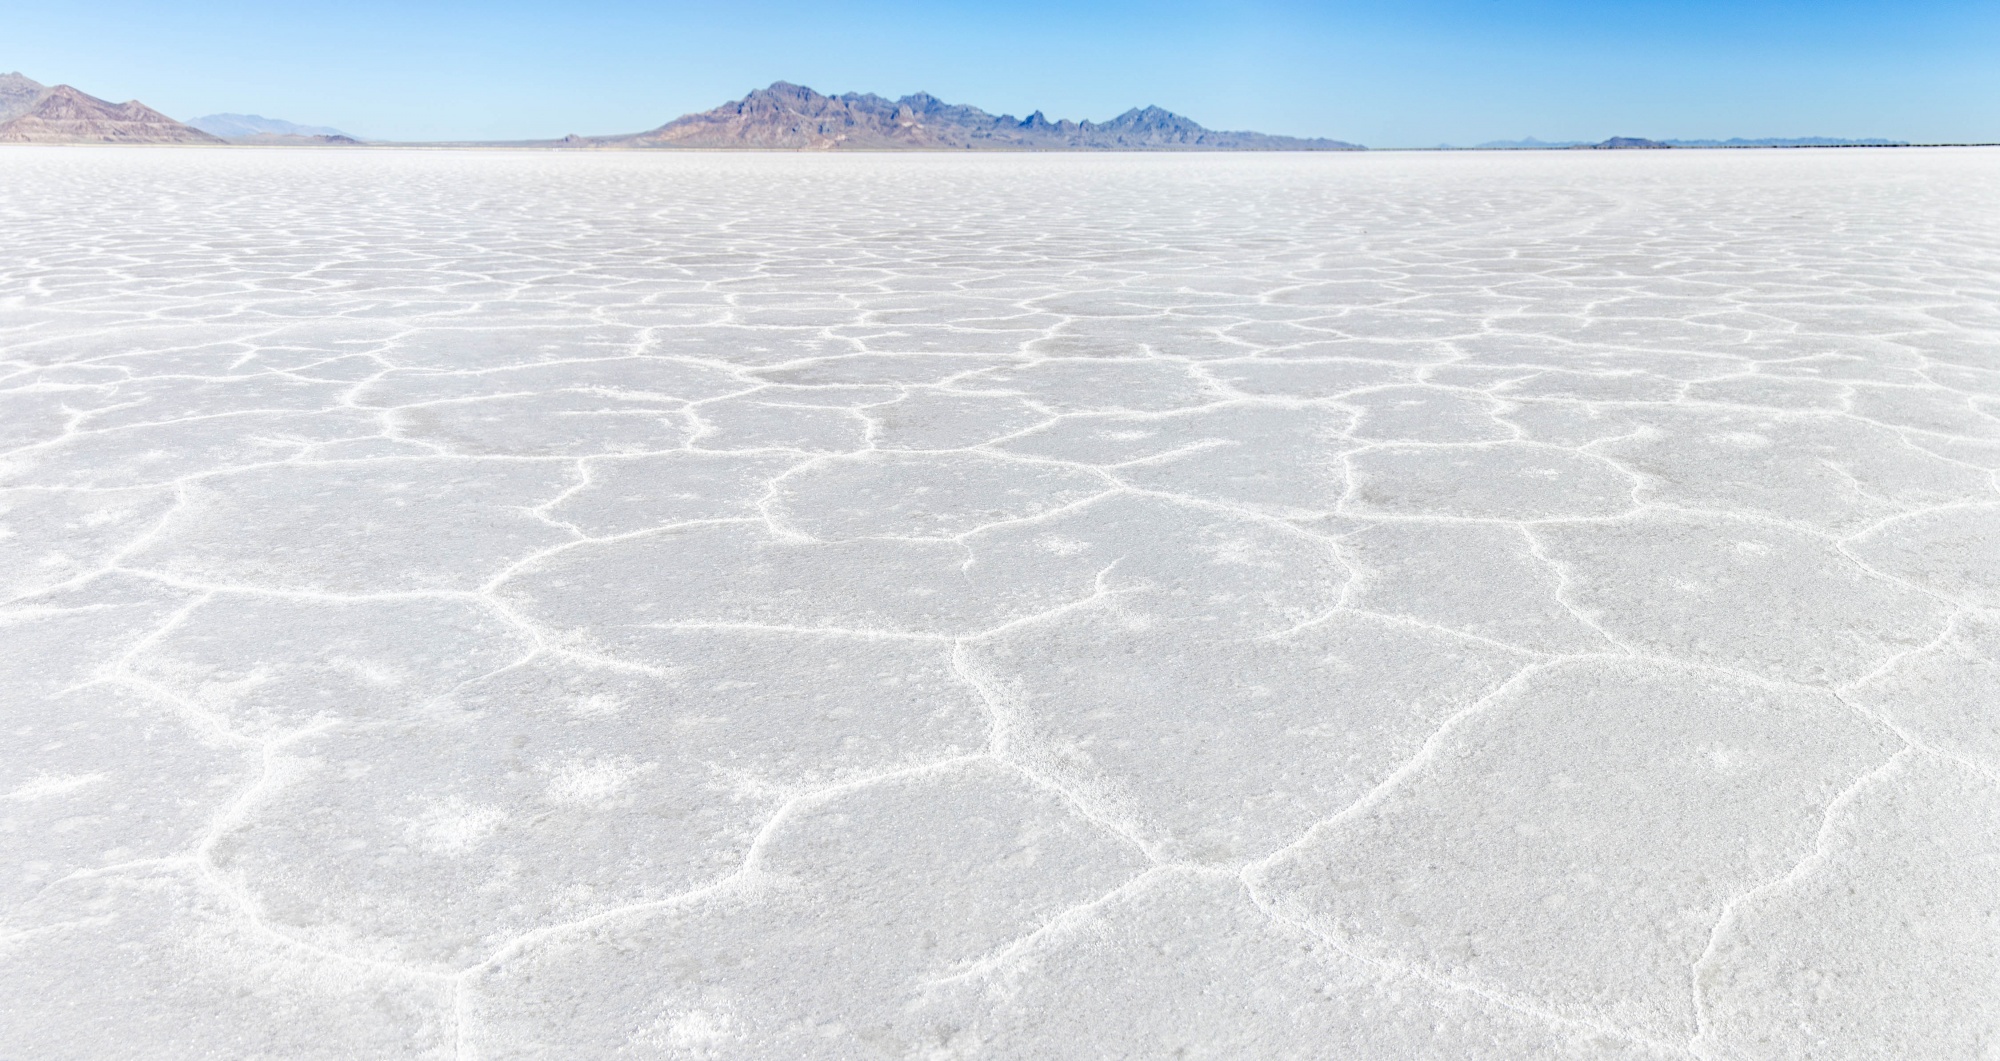 Best remote destinations, white salt crust on the western edge of the Great Salt Lake basin, Bonneville Salt Flats Utah